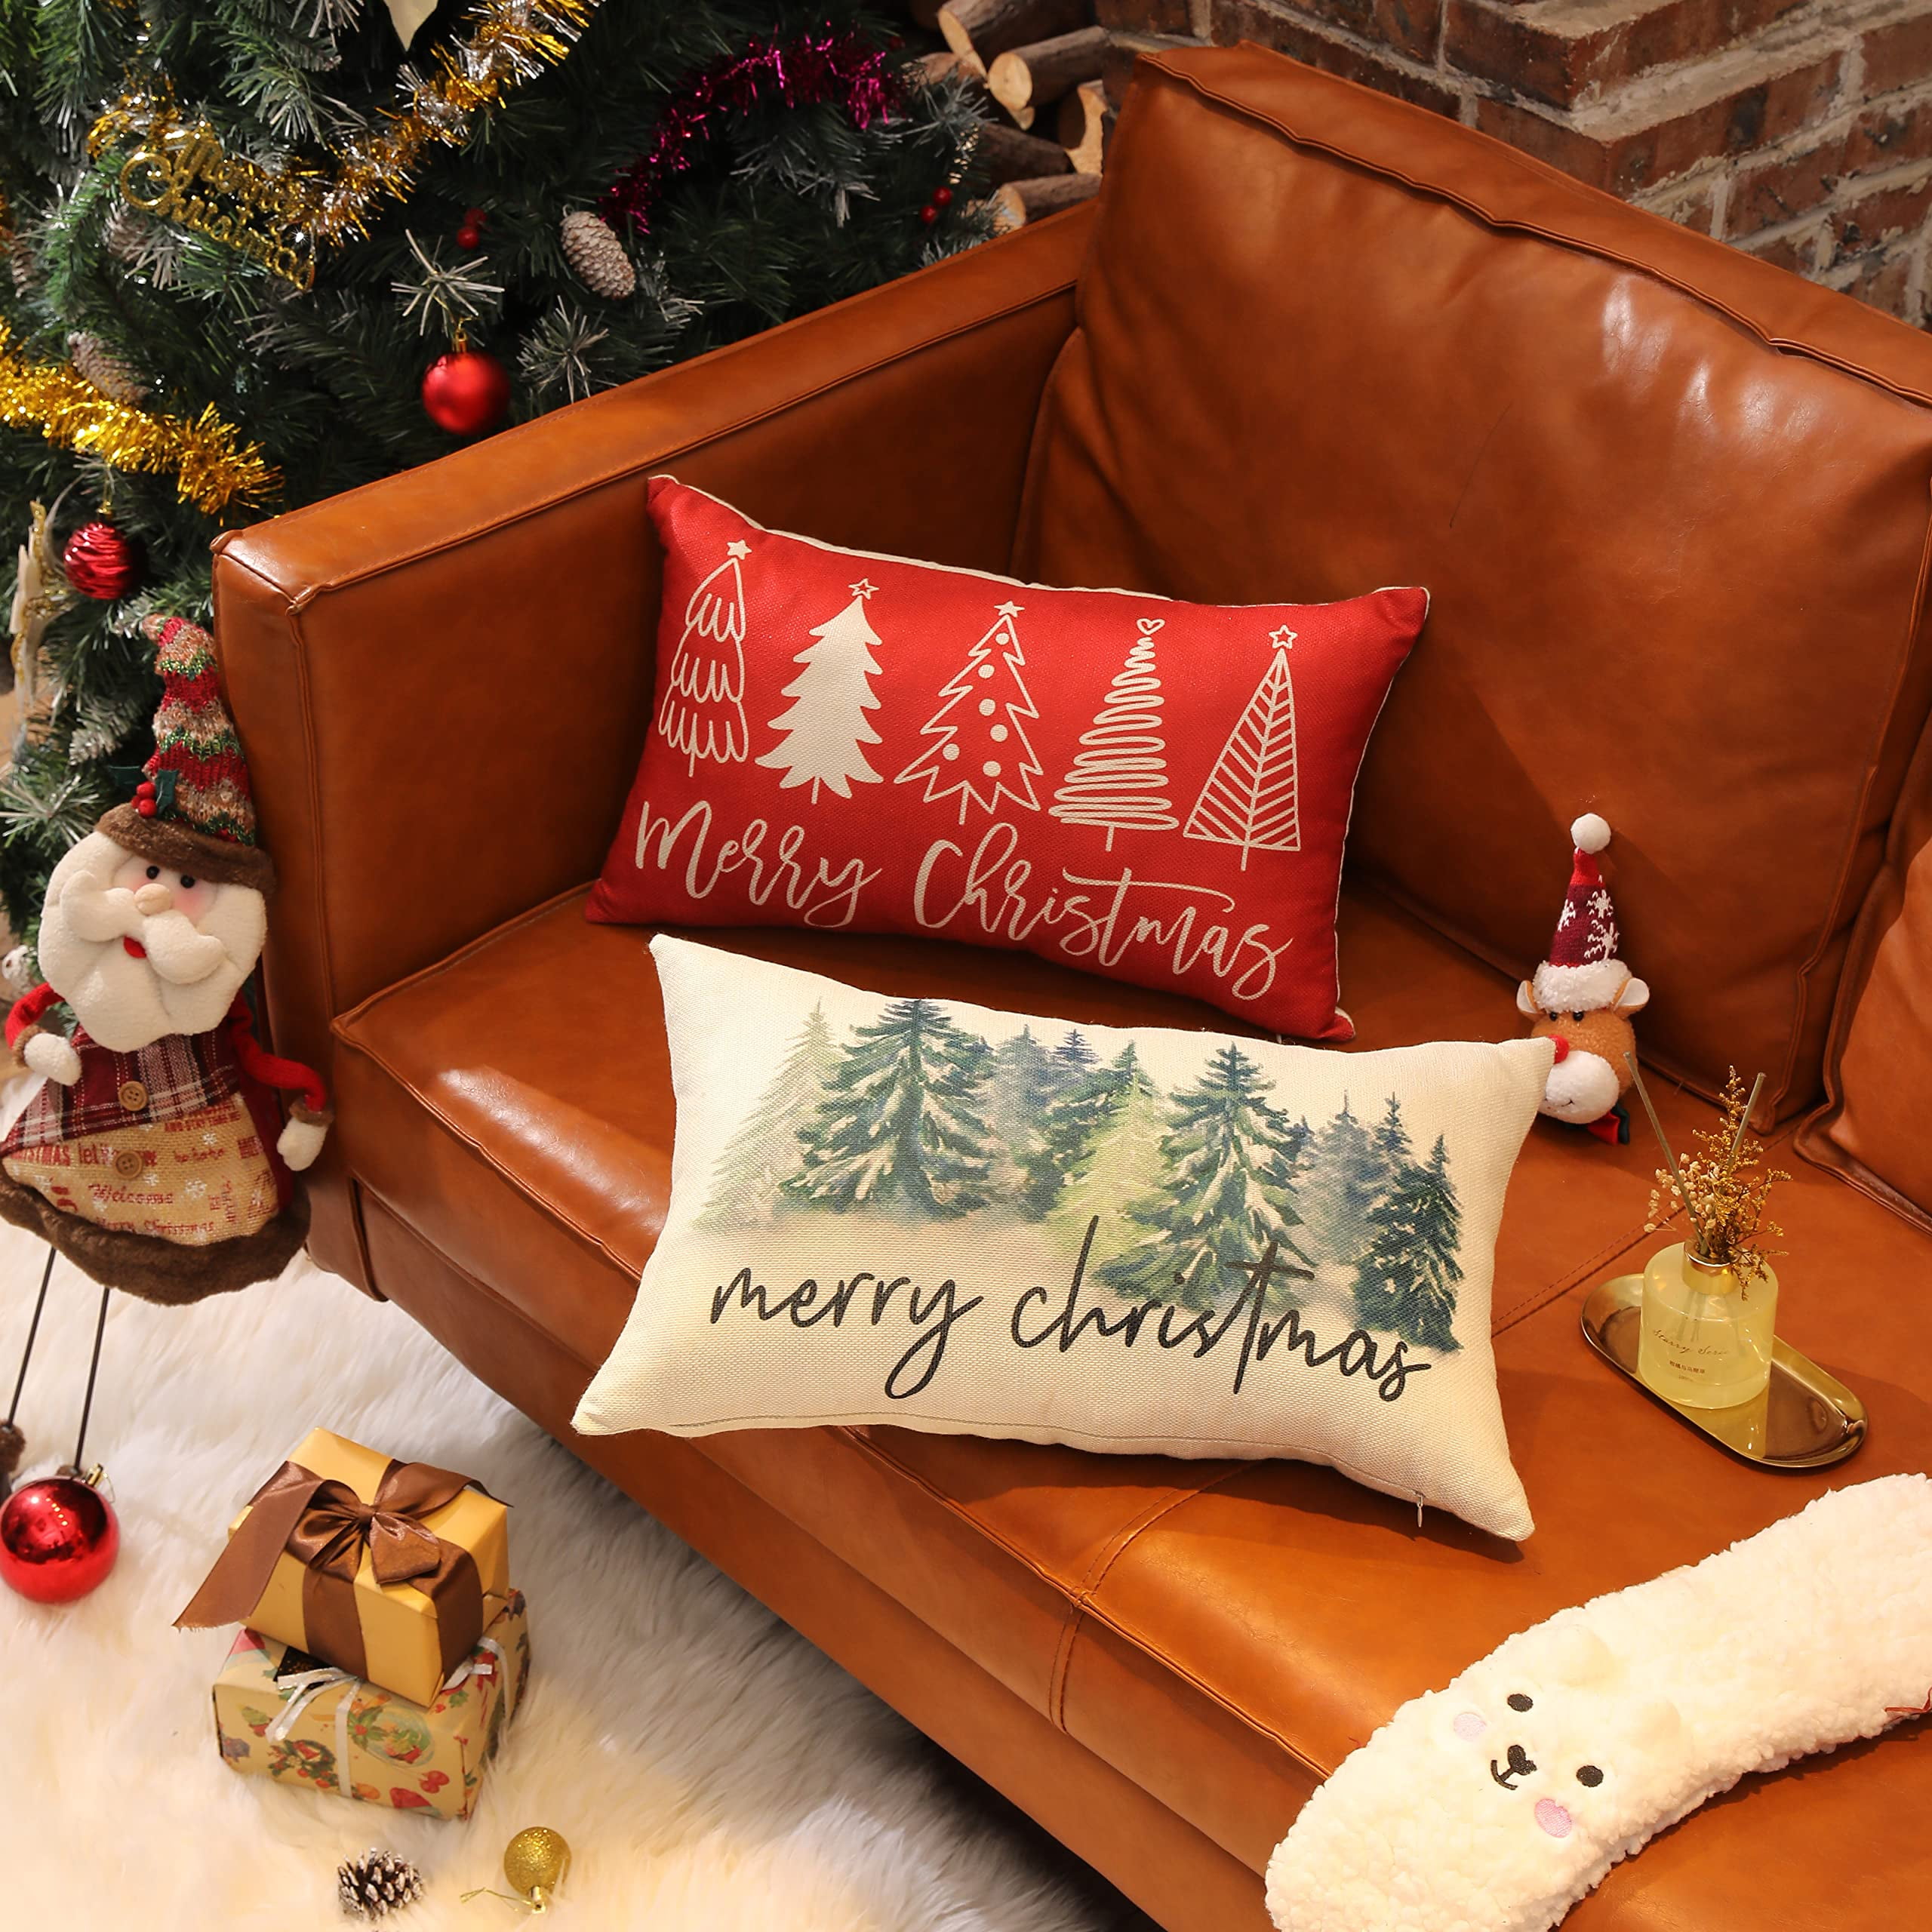  Cirzone Christmas Pillow Covers 12x20 Christmas Tree